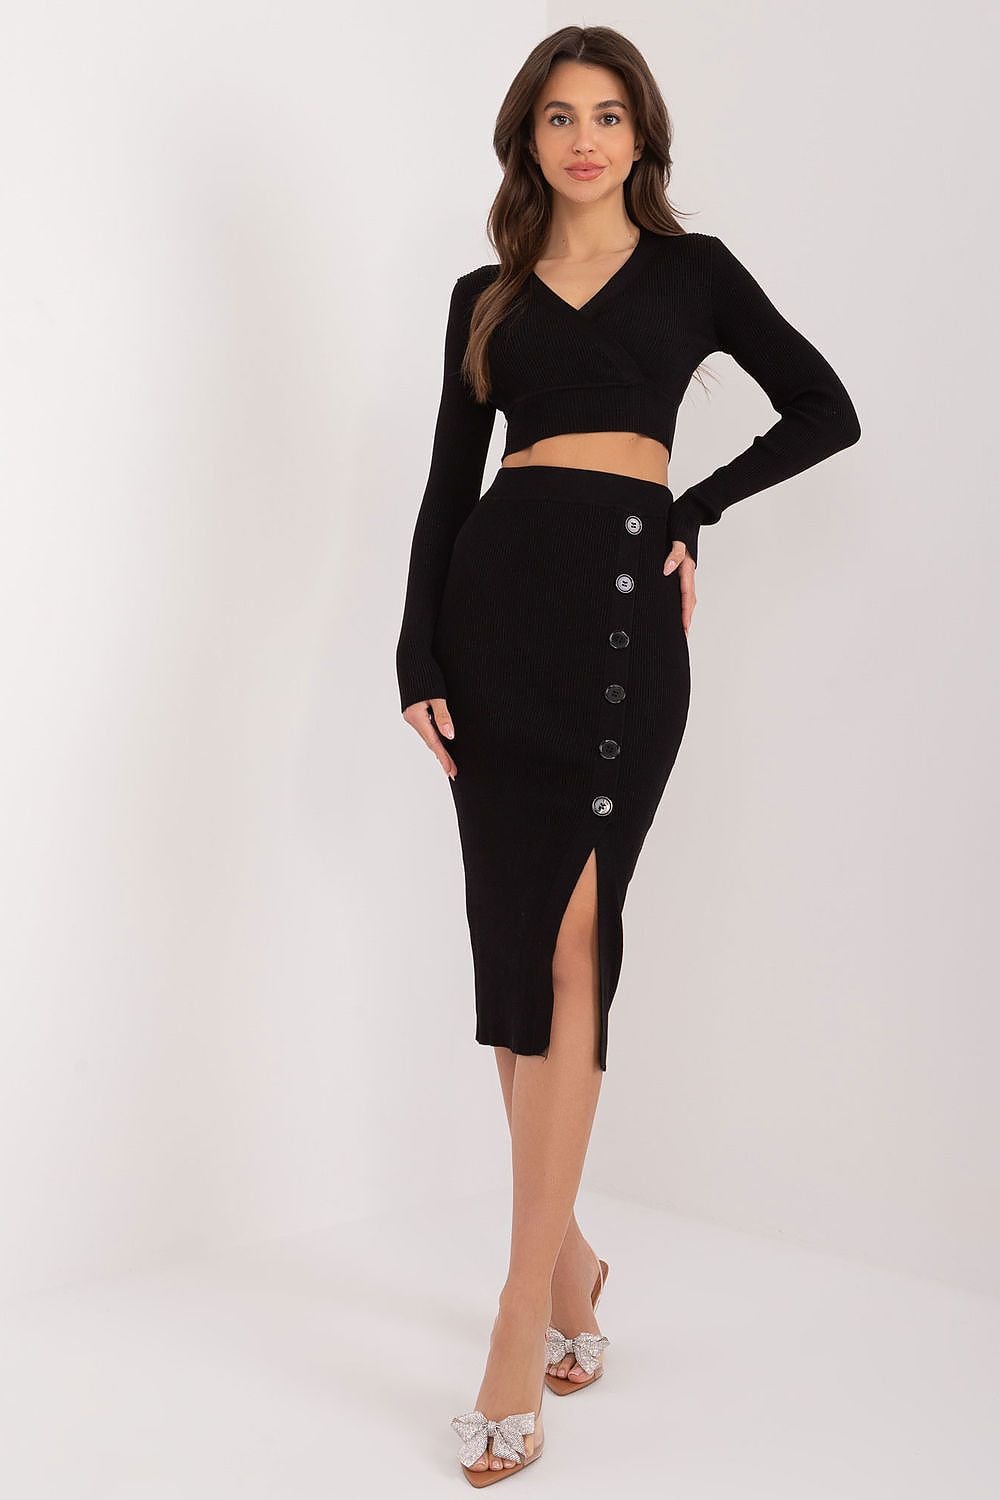 TEEK - Cropped V-Neck Top Button Slit Skirt Set SET TEEK MH black One Size 